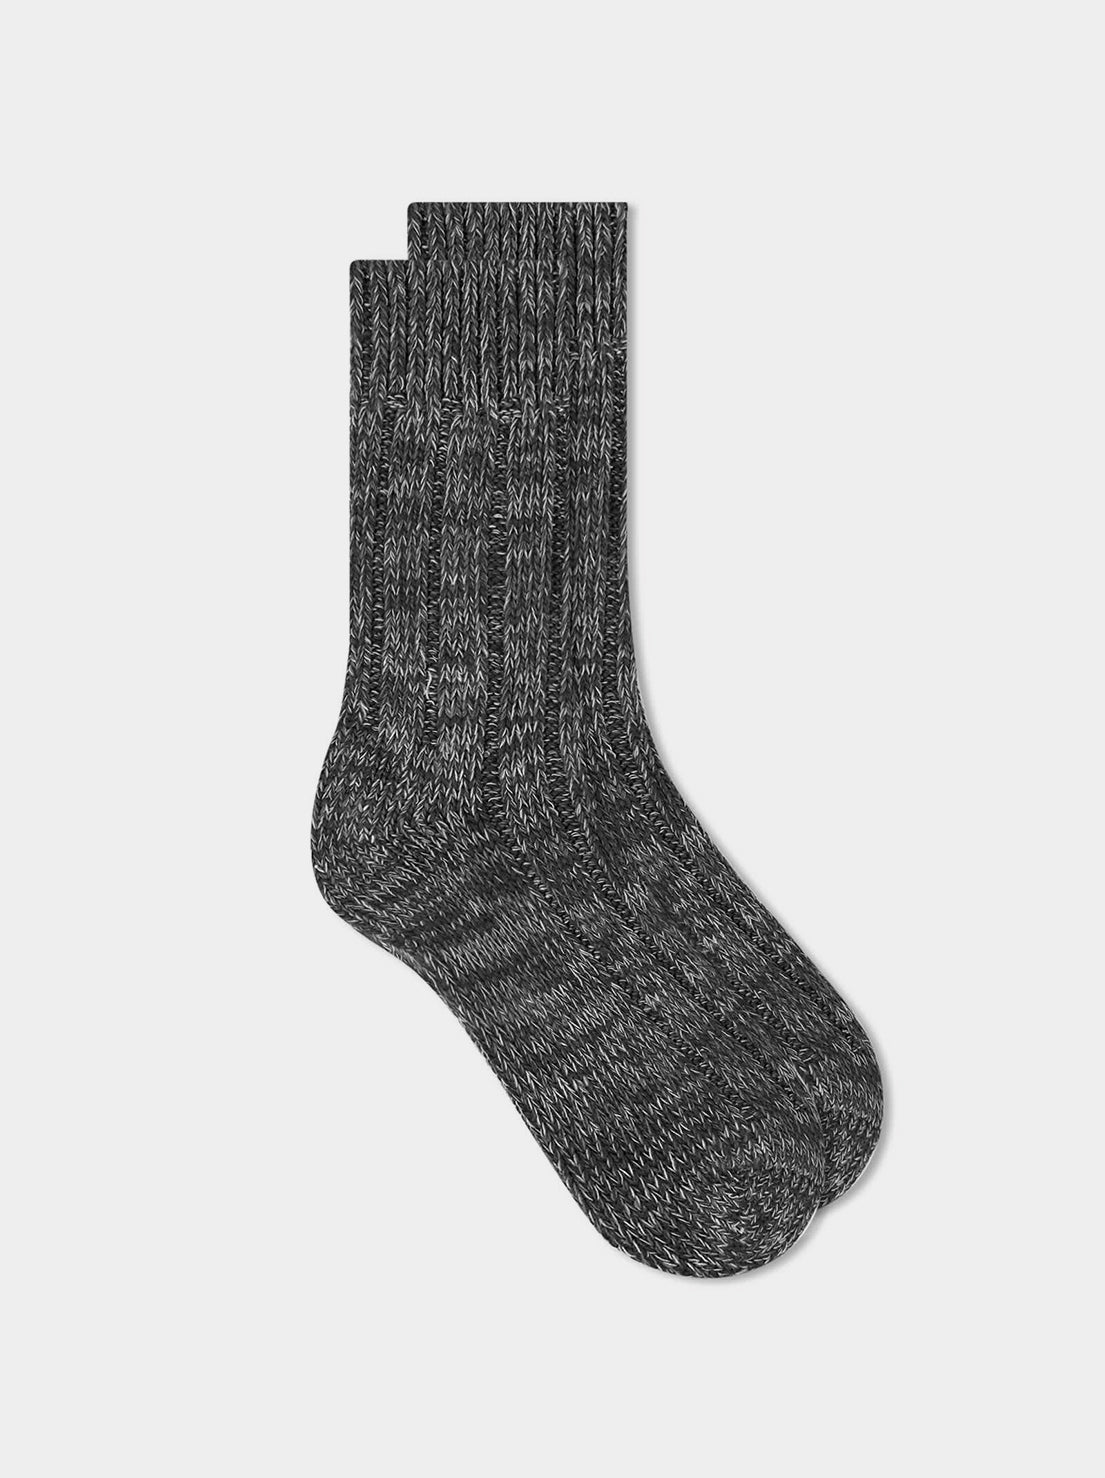 Birkenstock - Cotton Twist Socks - Black